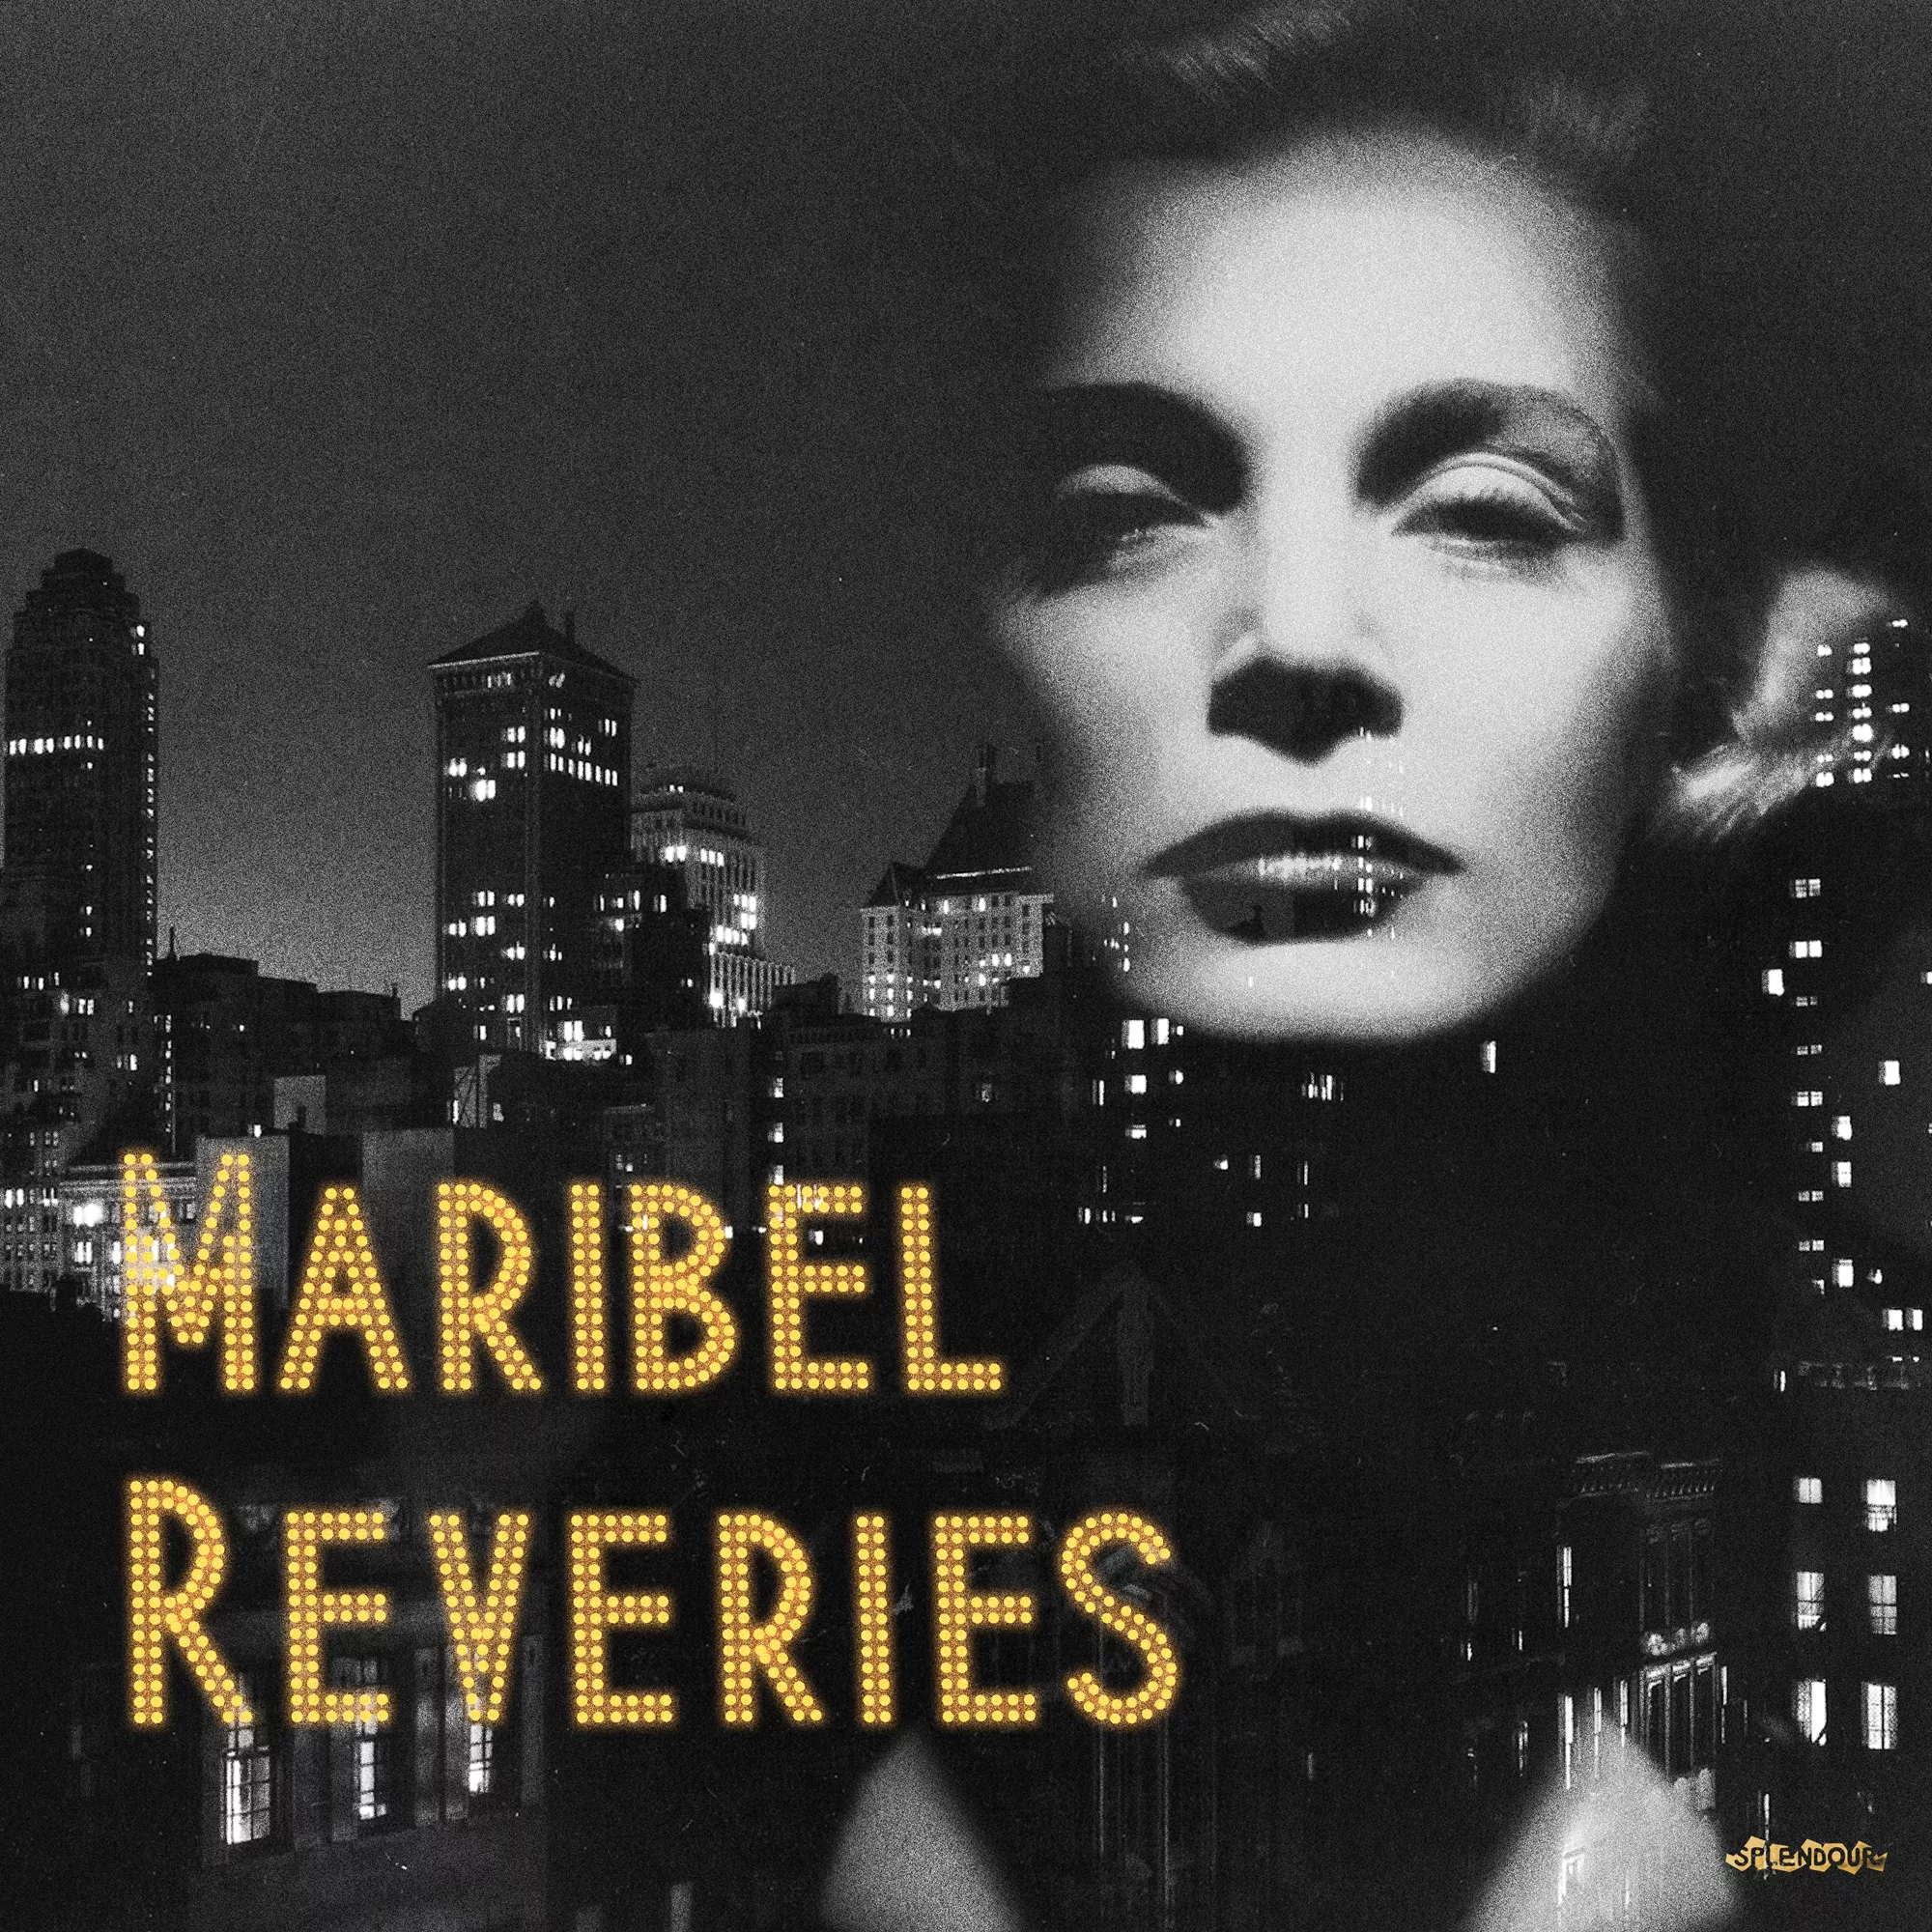 Reveries - Maribel